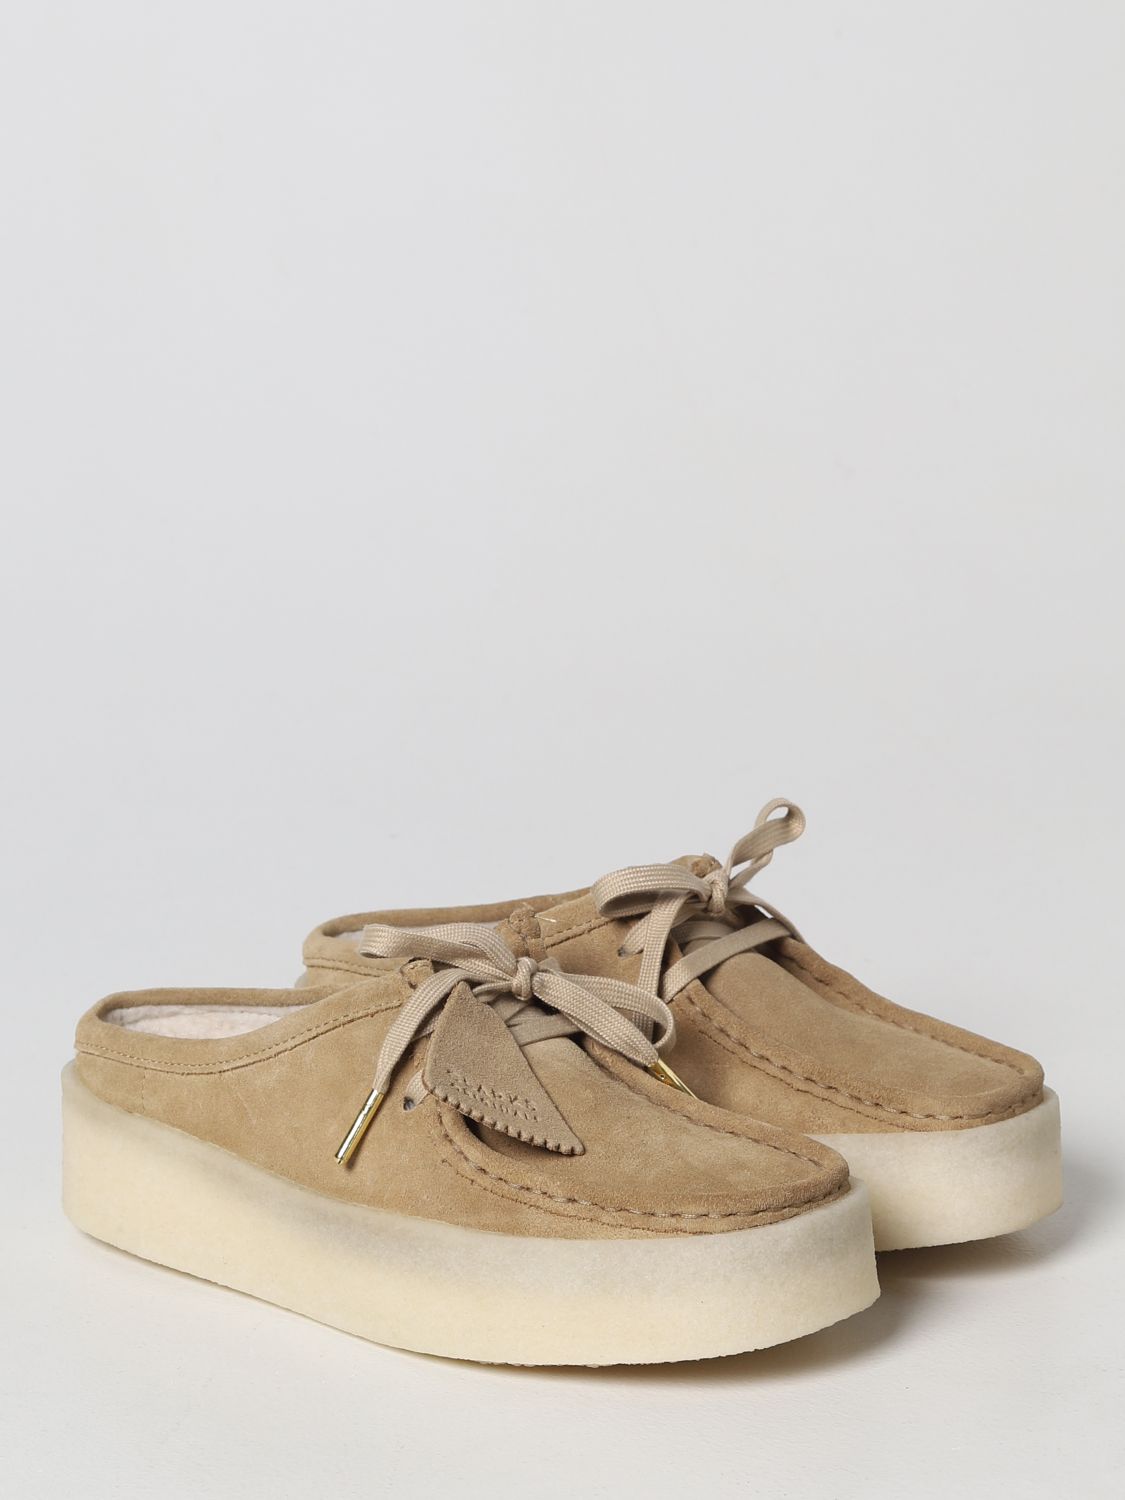 Clarks Originals Outlet: for woman - Beige Originals flat shoes 168636 online on GIGLIO.COM